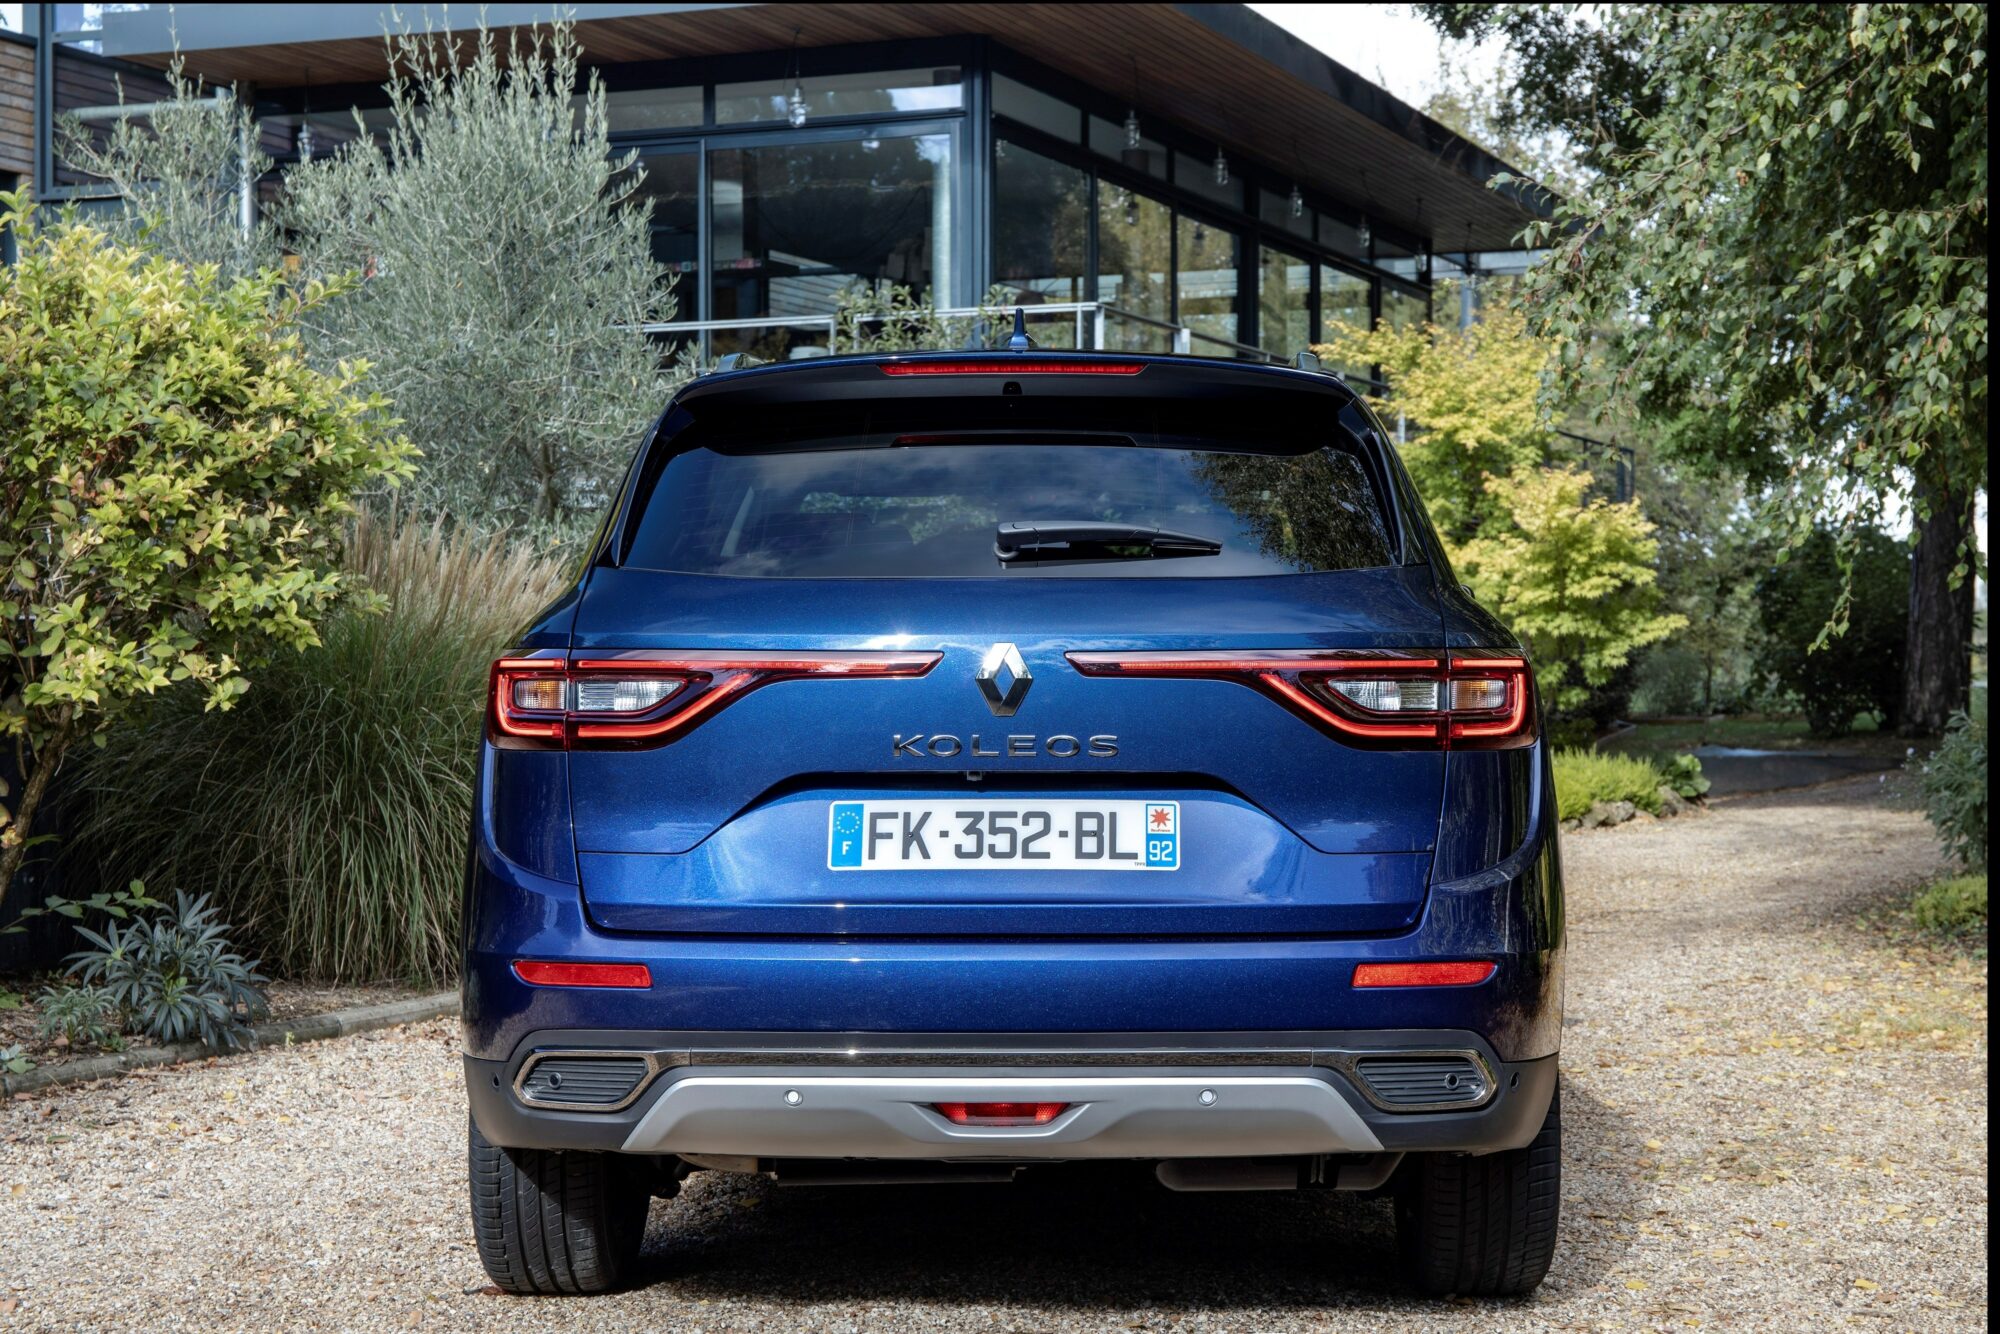 2019 - New Renault KOLEOS Drive Test